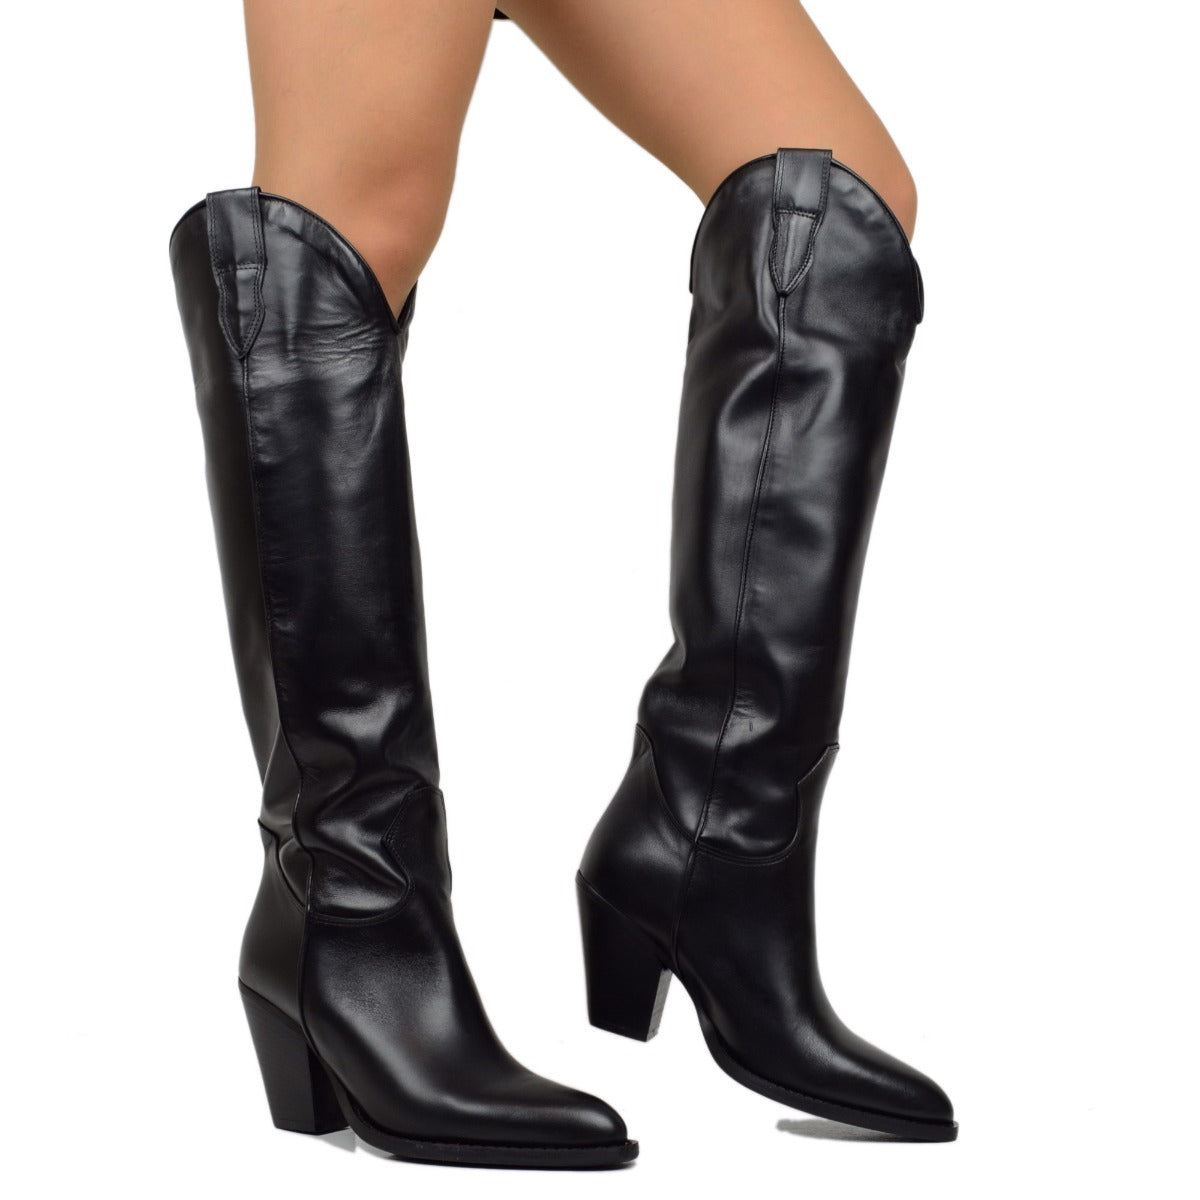 High Heel Black Leather Texan Boots Made in Italy – KikkiLine Calzature